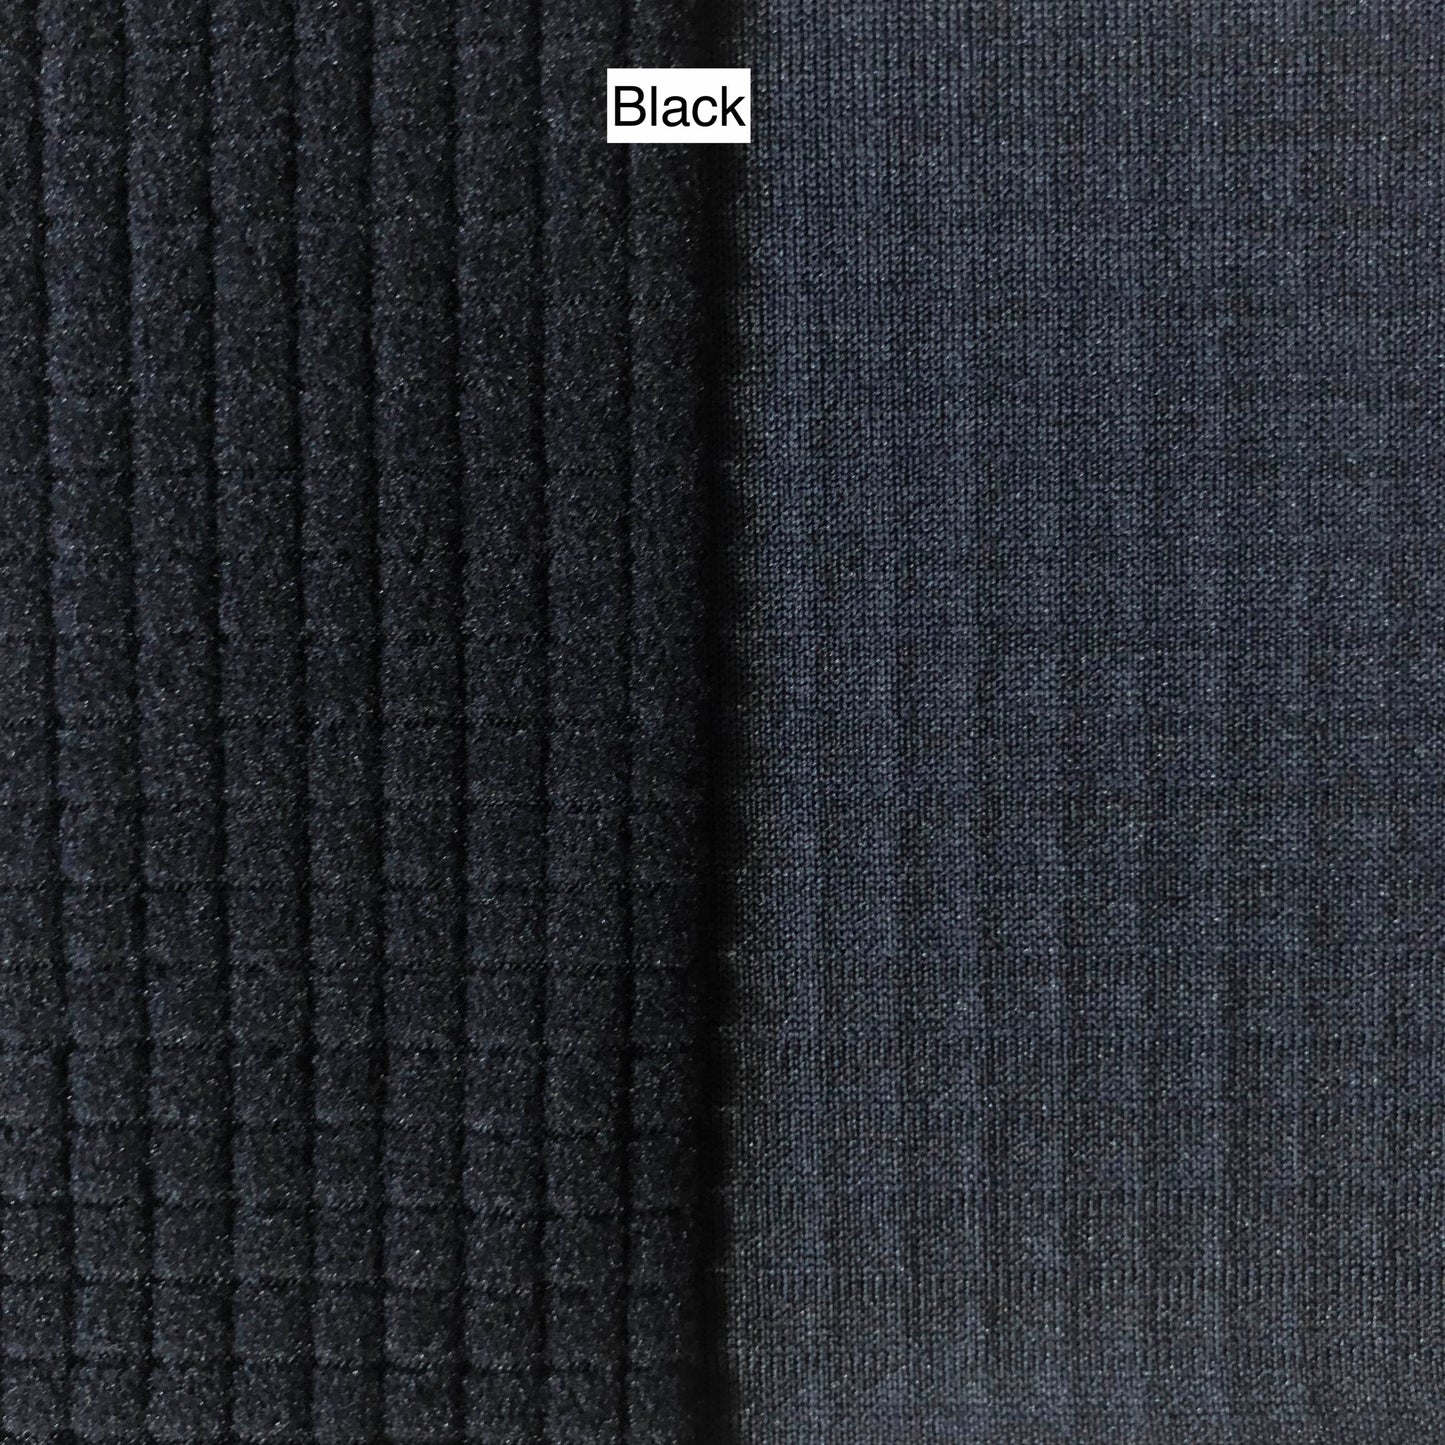 A swatch of Black Polartec® Power Grid™ fleece.